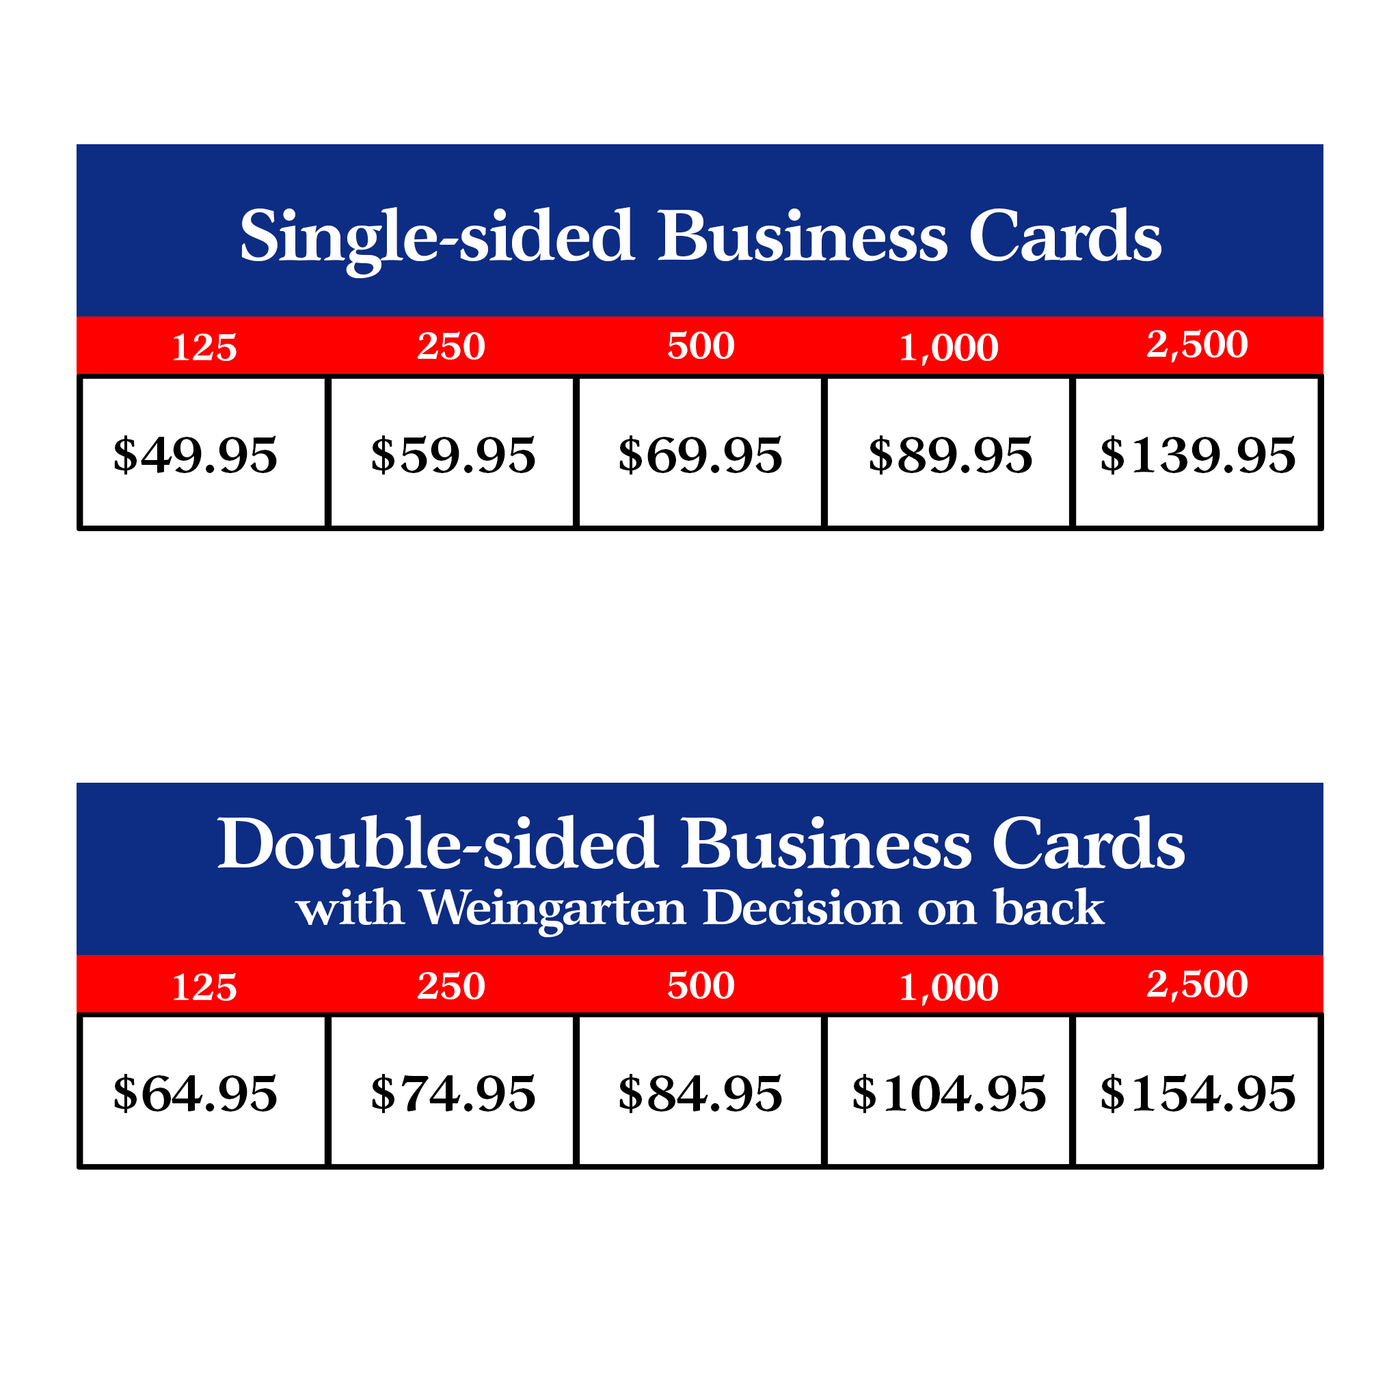 BLET Union Printed Business Cards - BLET-102-FB